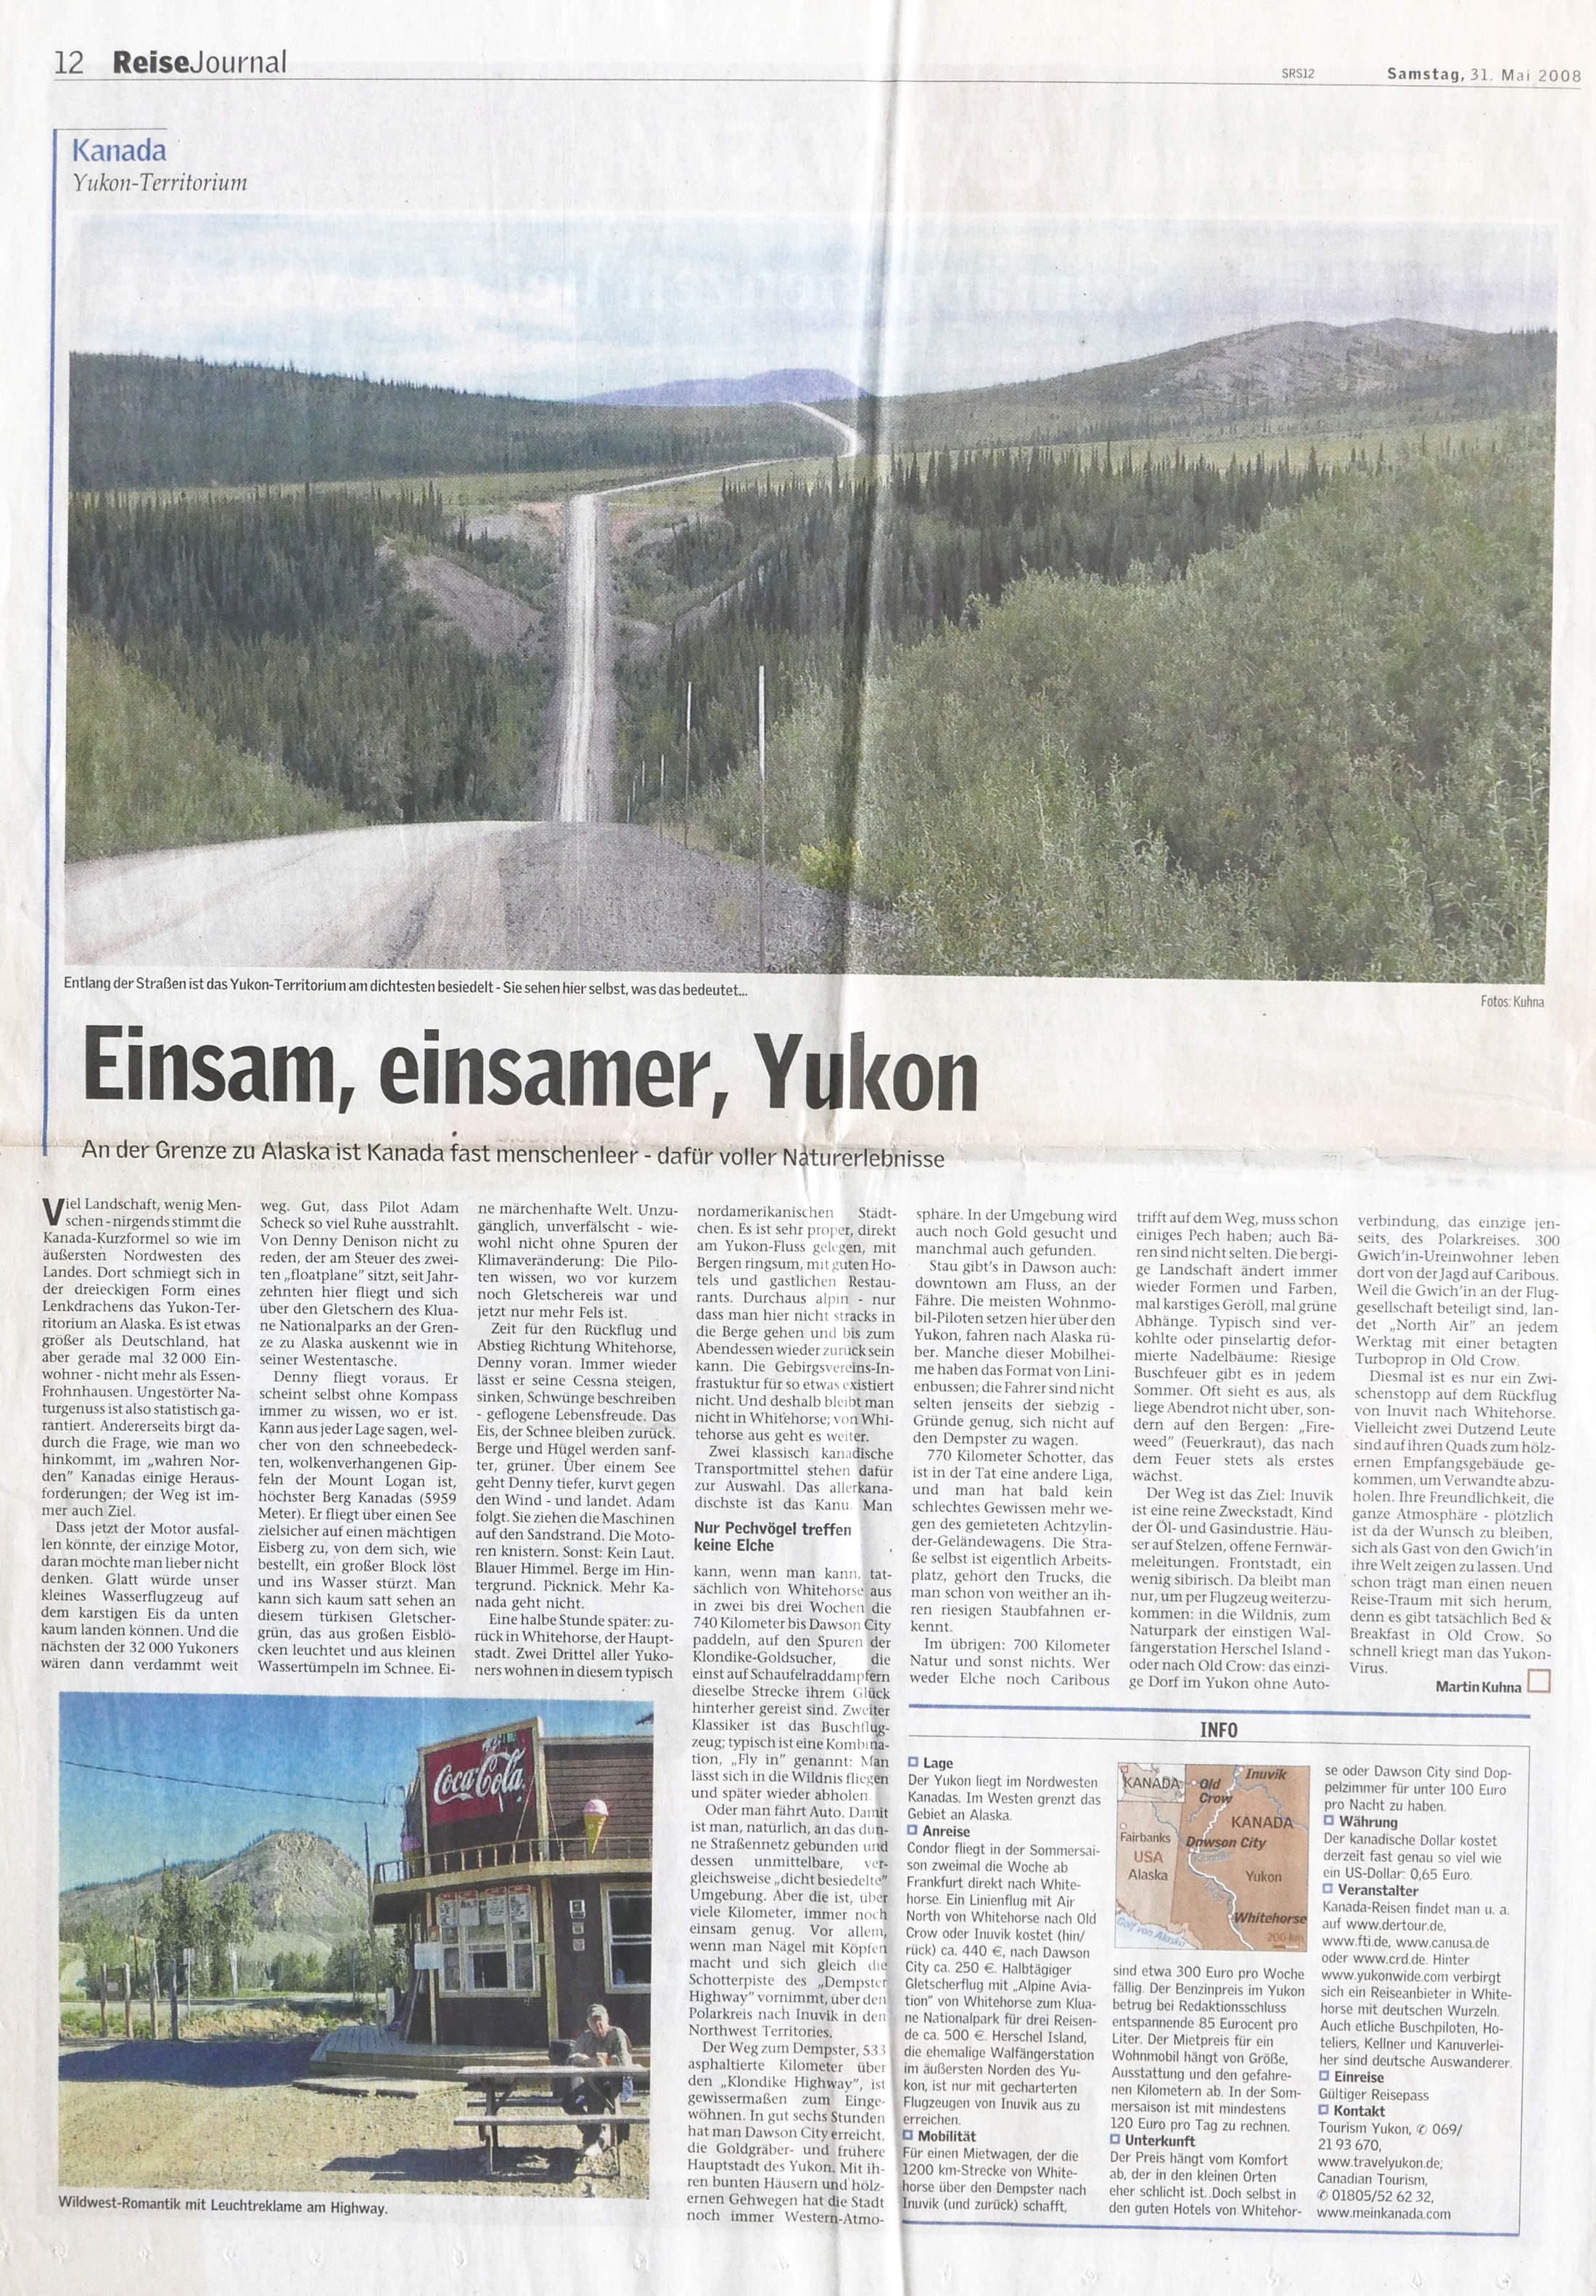 Reisejournal_310508_Yukon_web2